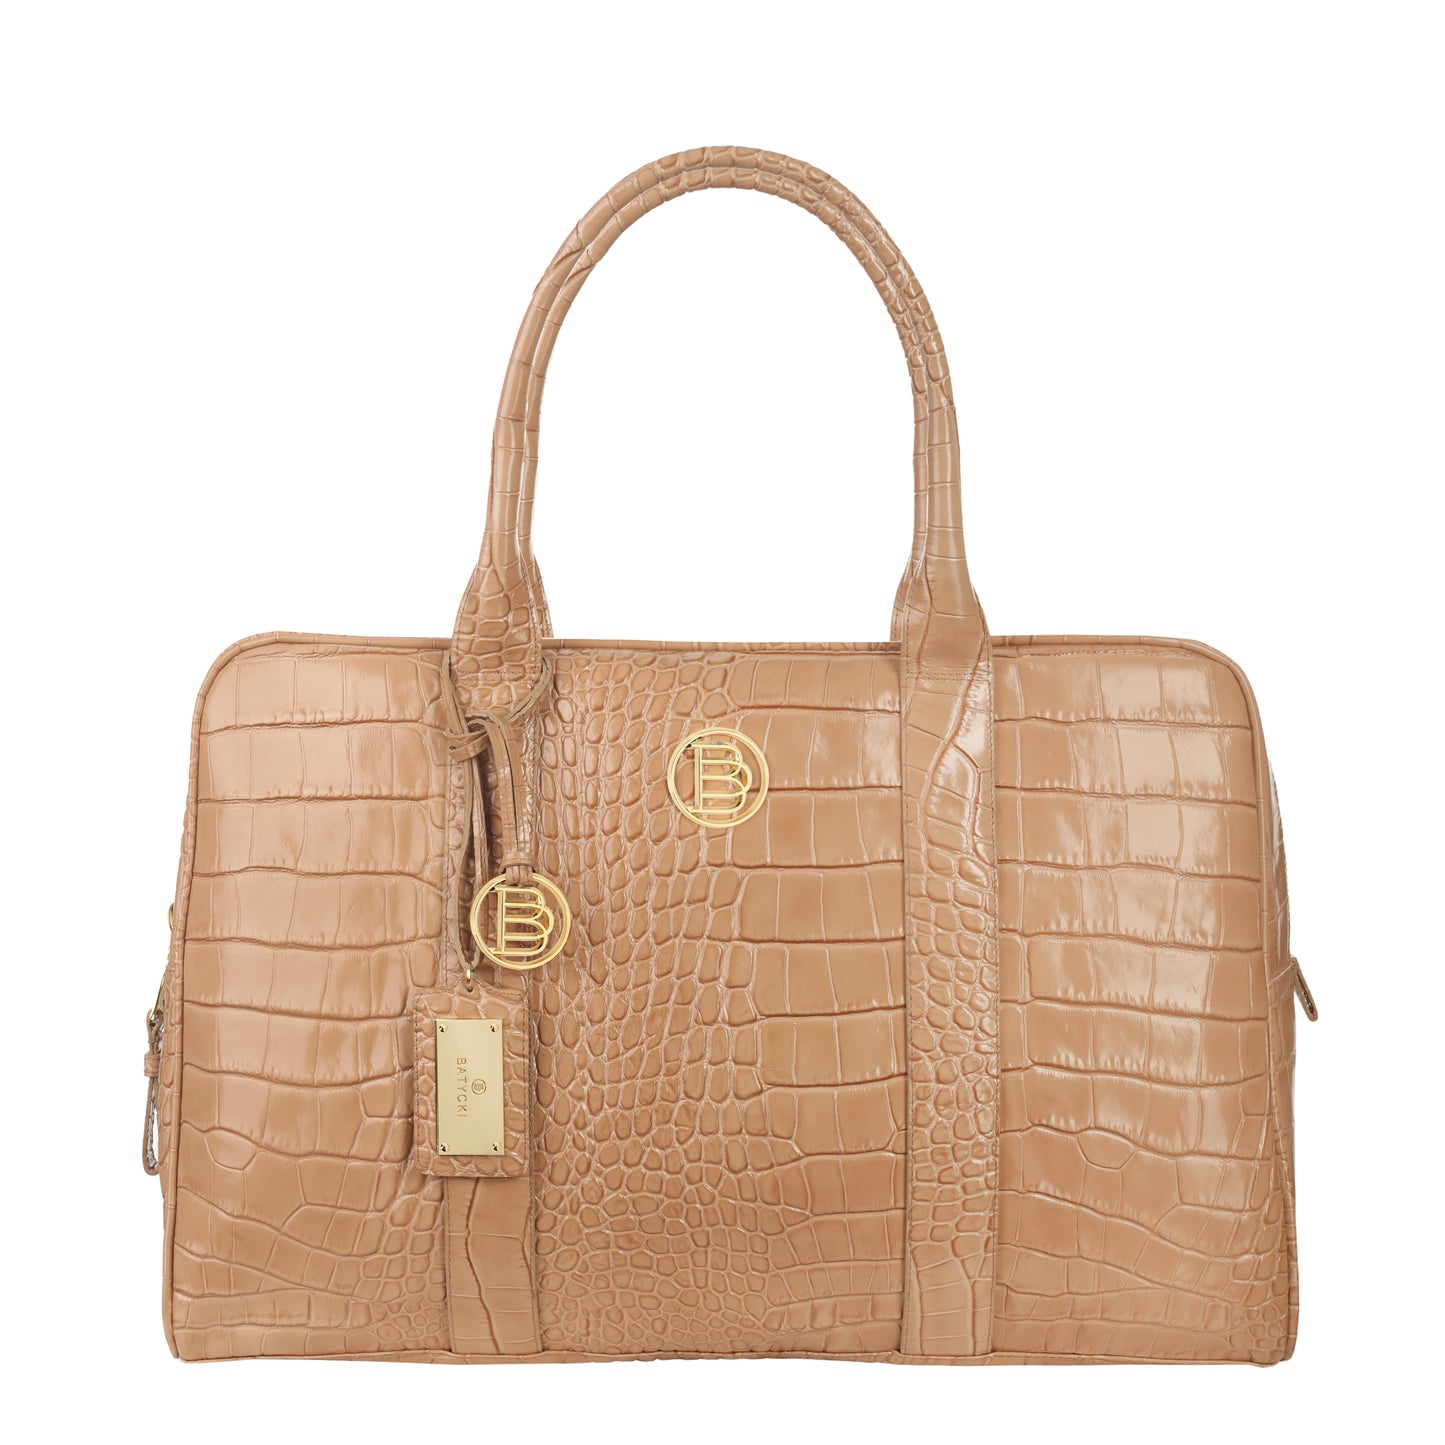 CLASSIC croco camel leather bag